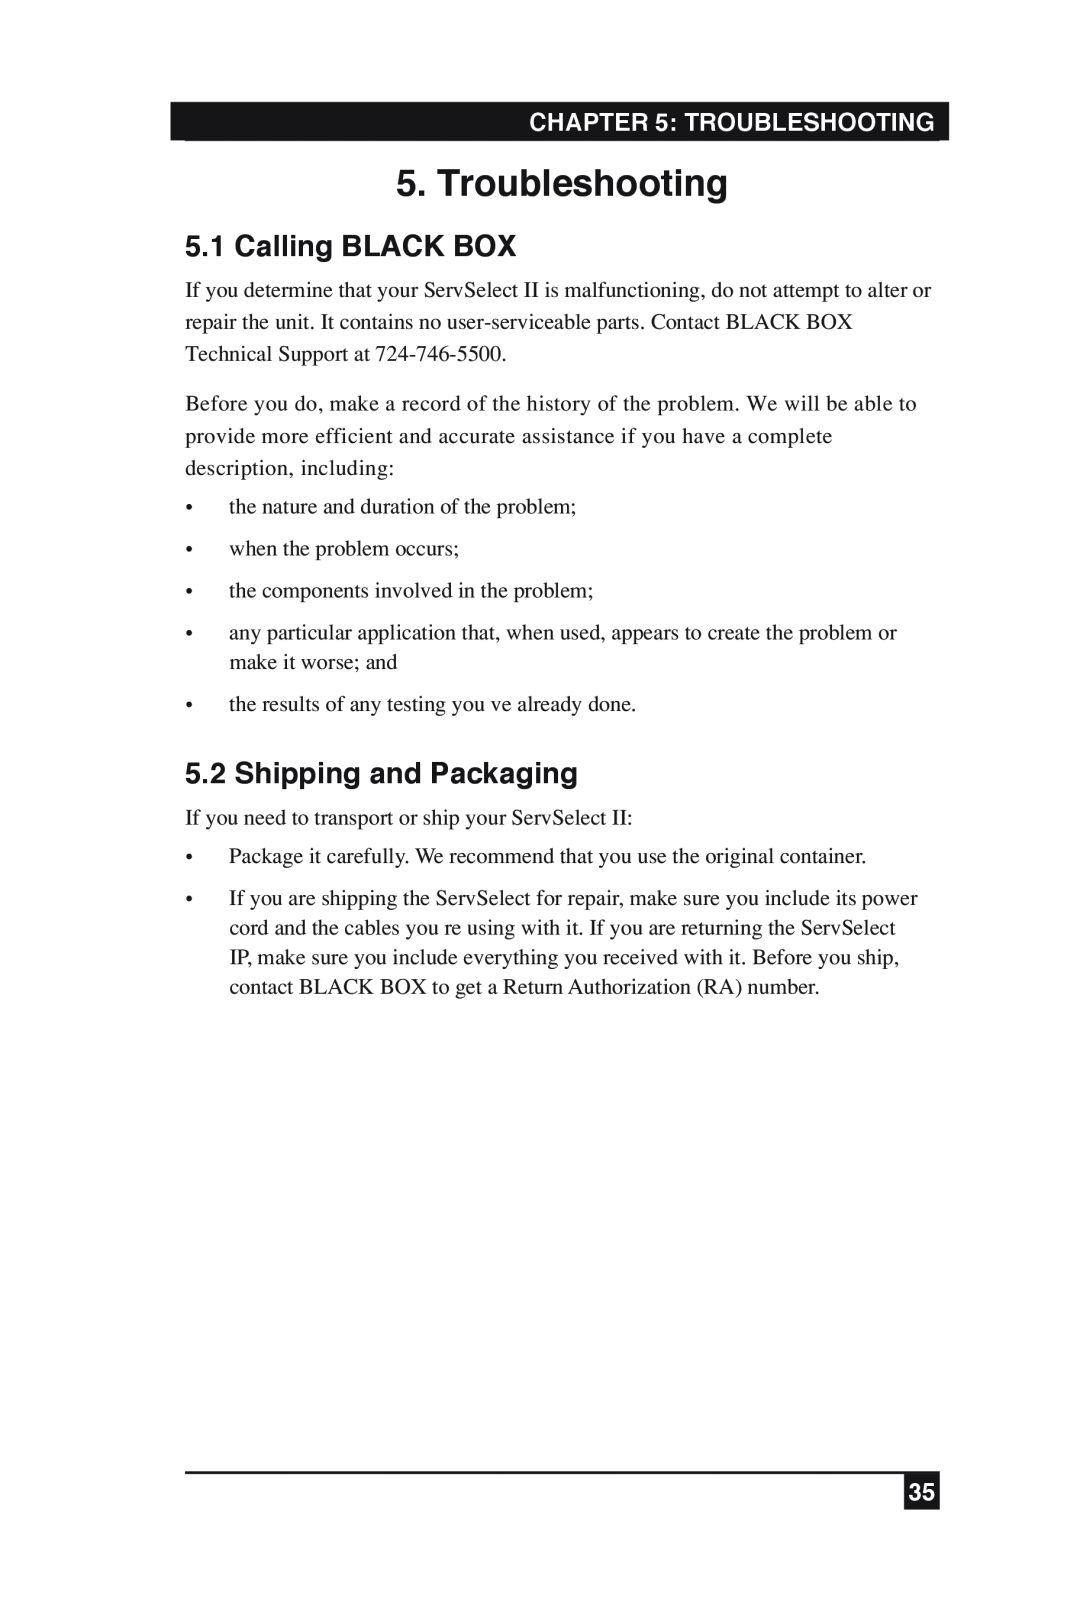 Black Box KV2016A, KV2016E manual Troubleshooting, Calling BLACK BOX, Shipping and Packaging 